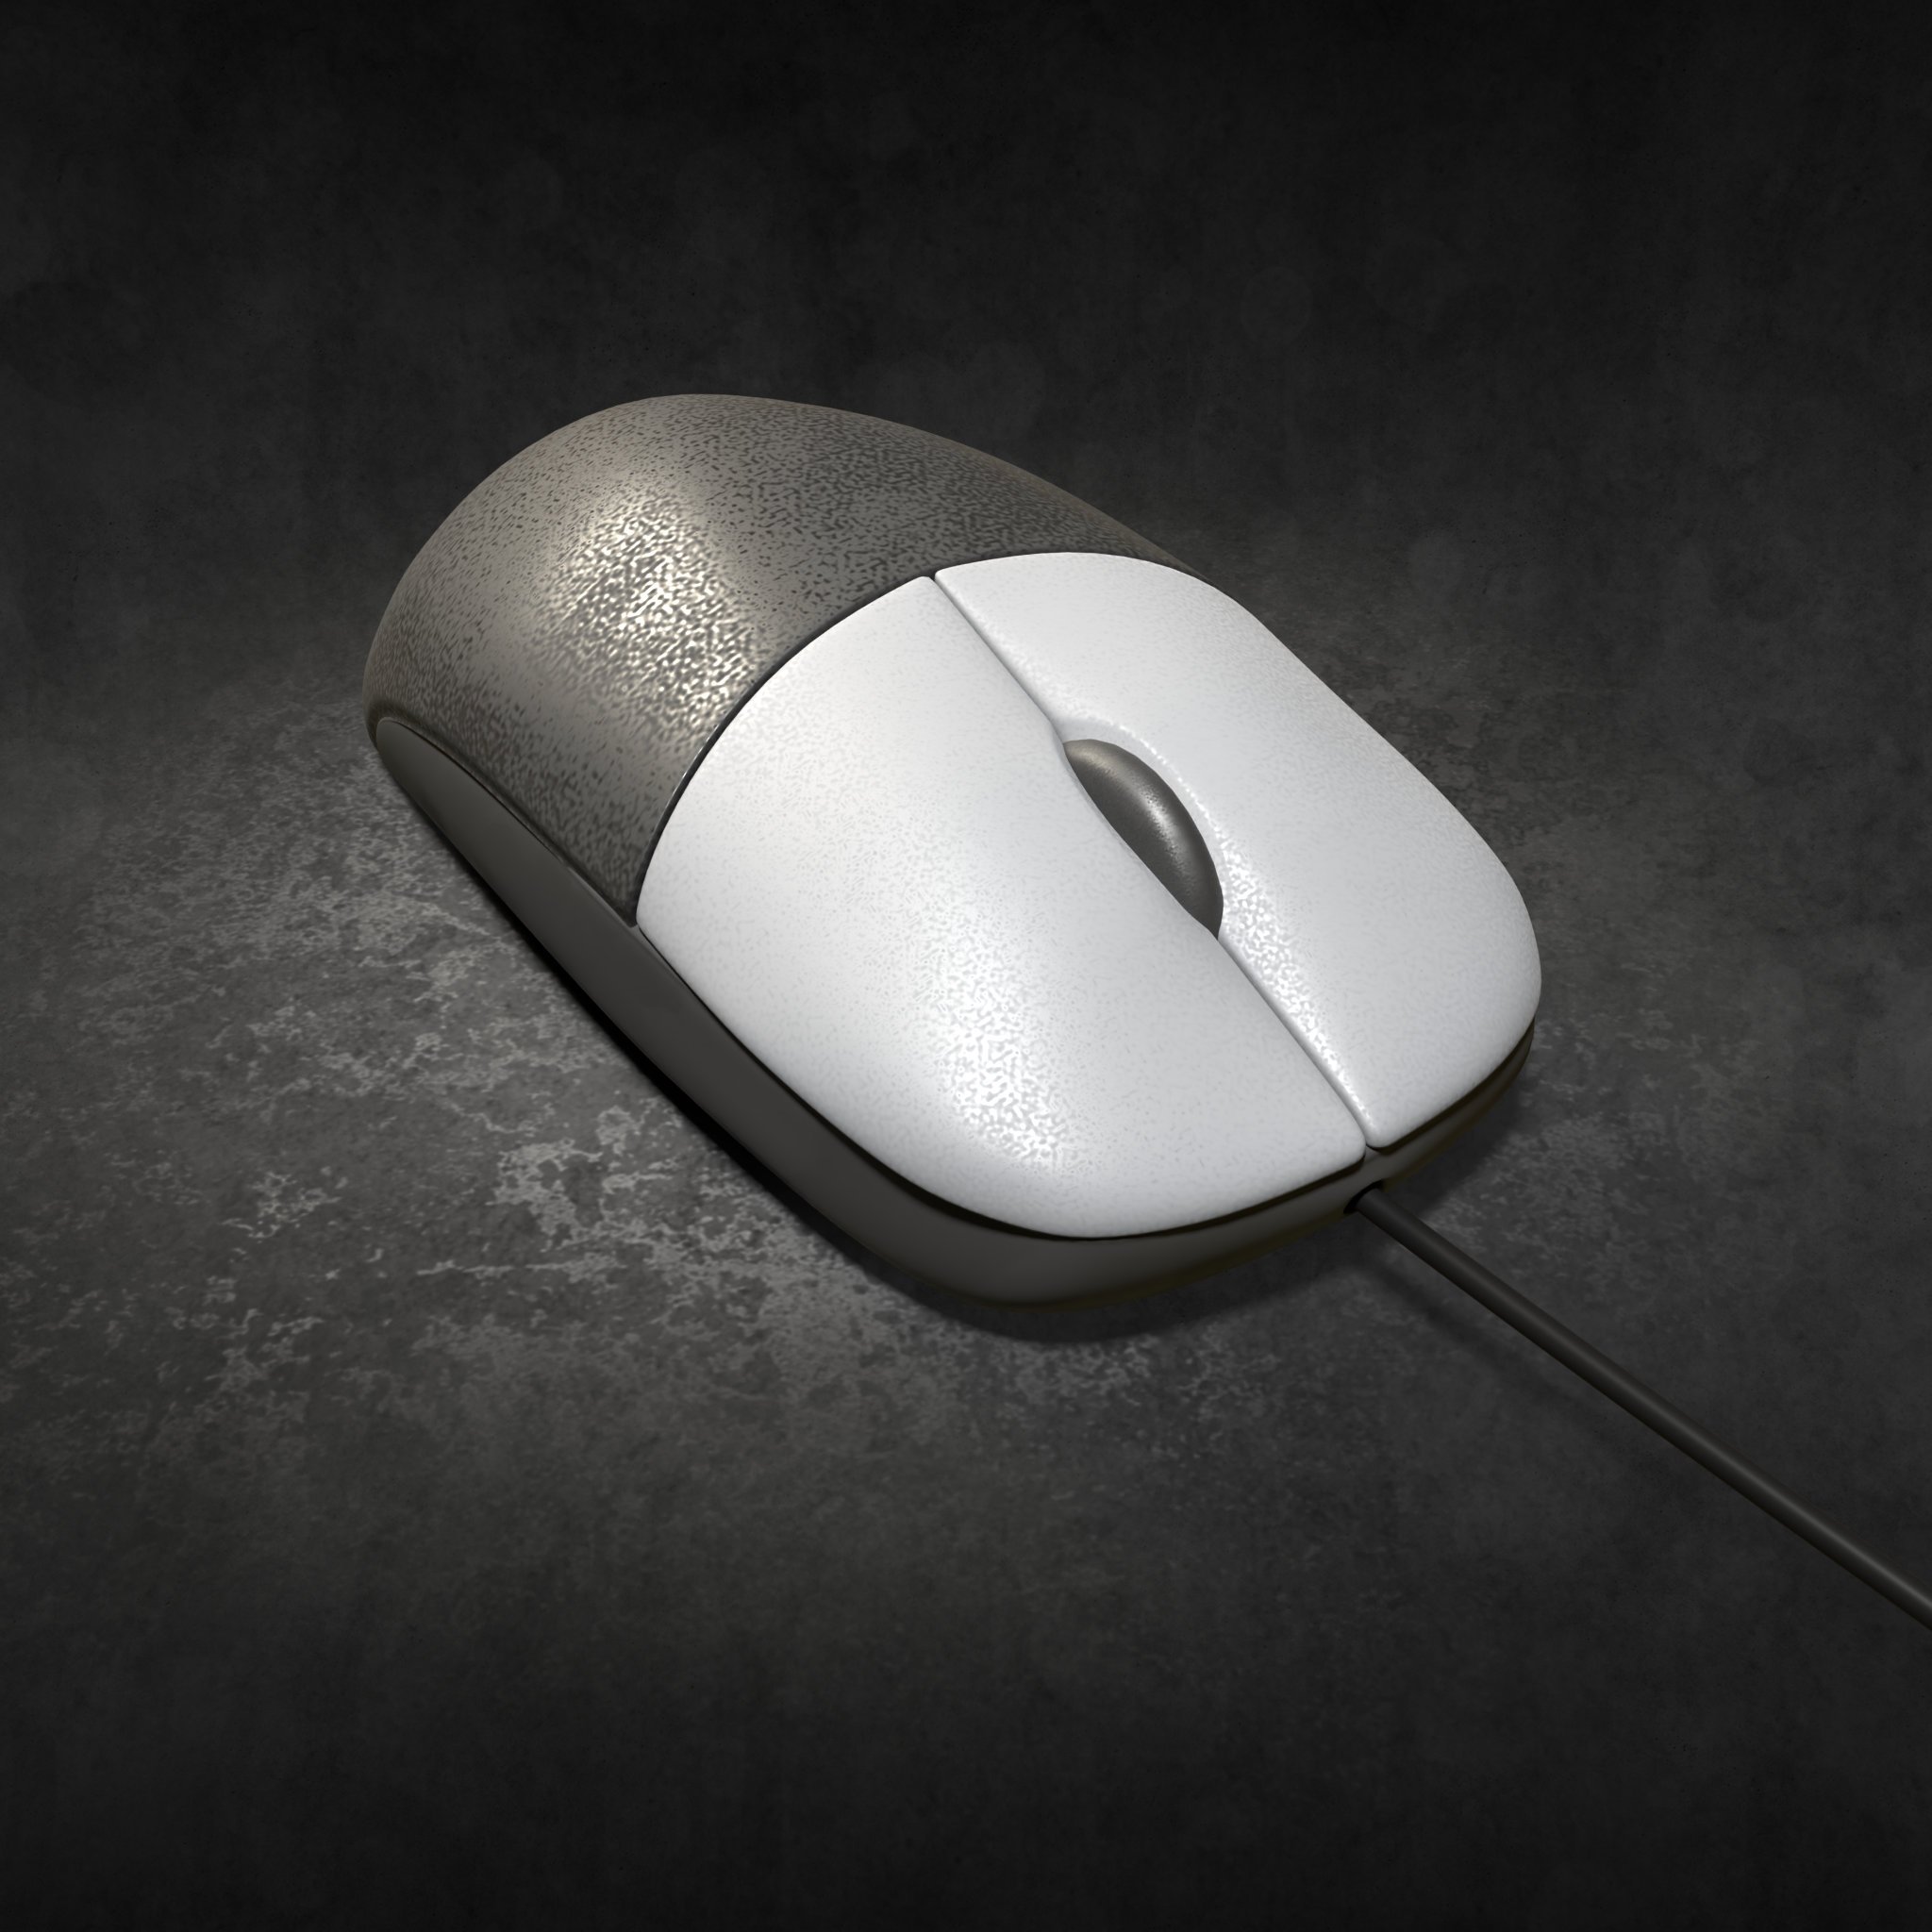 Realistic Logitech Trackball Mouse 3d Model 3D model